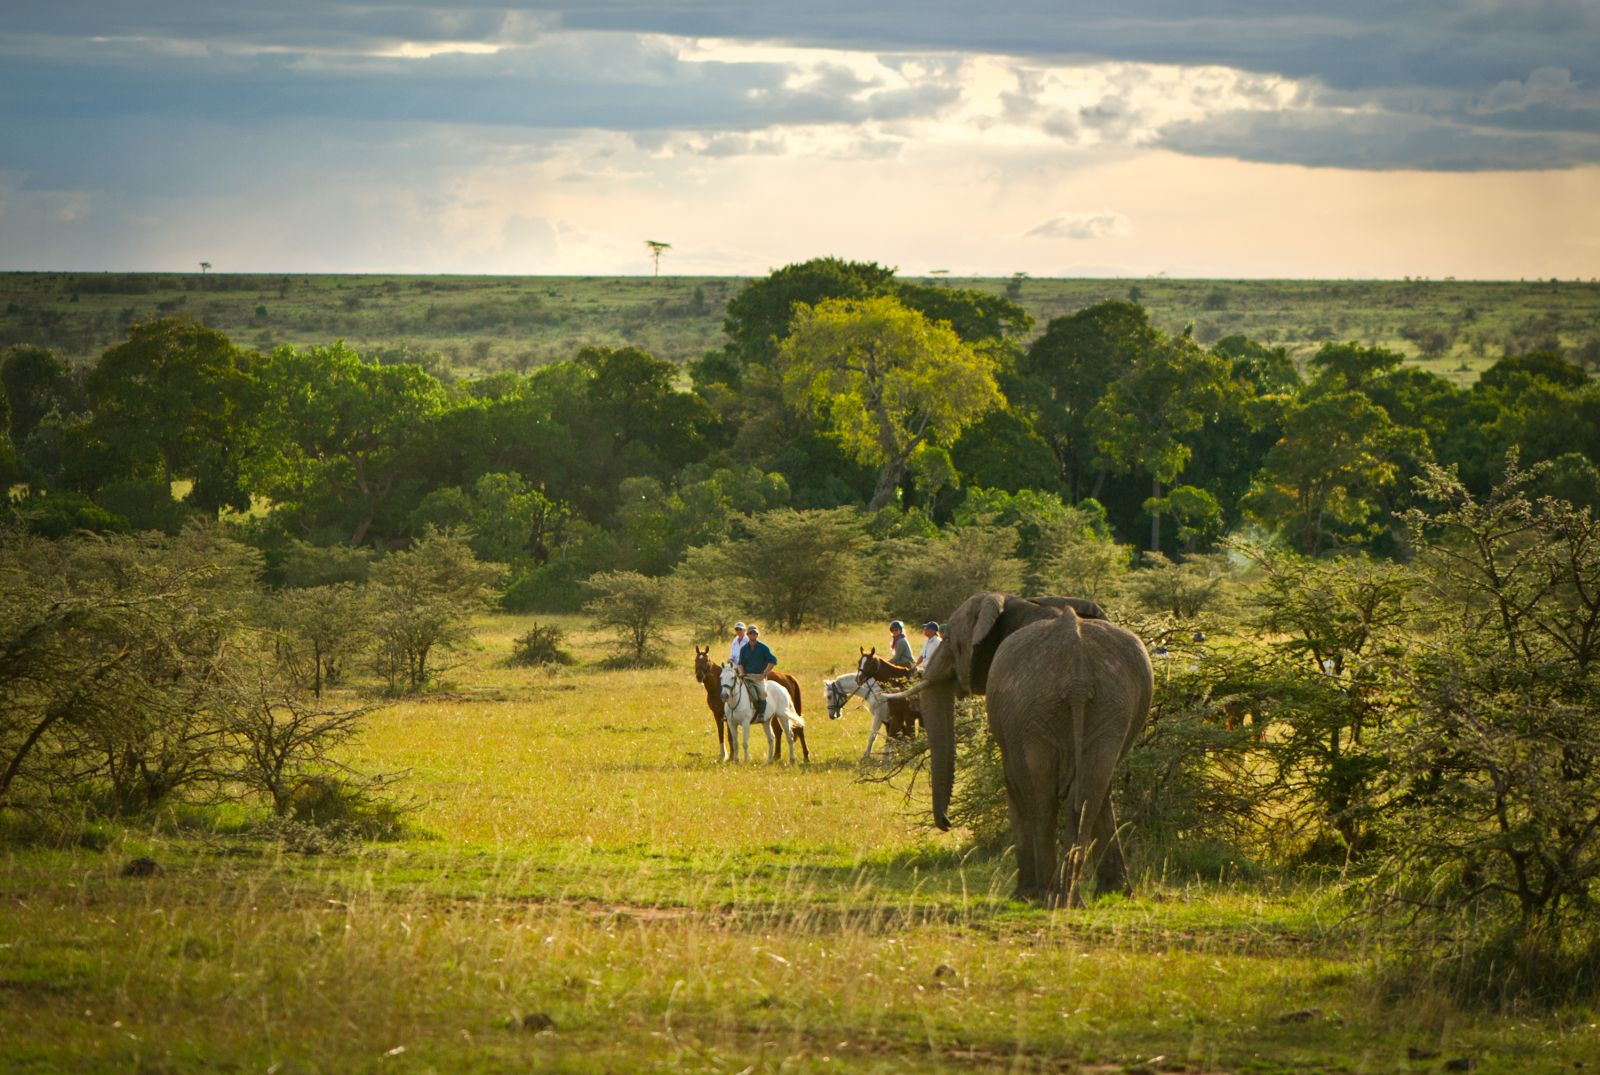 Riders and elephant in Masai Mara on Kenya riding safari